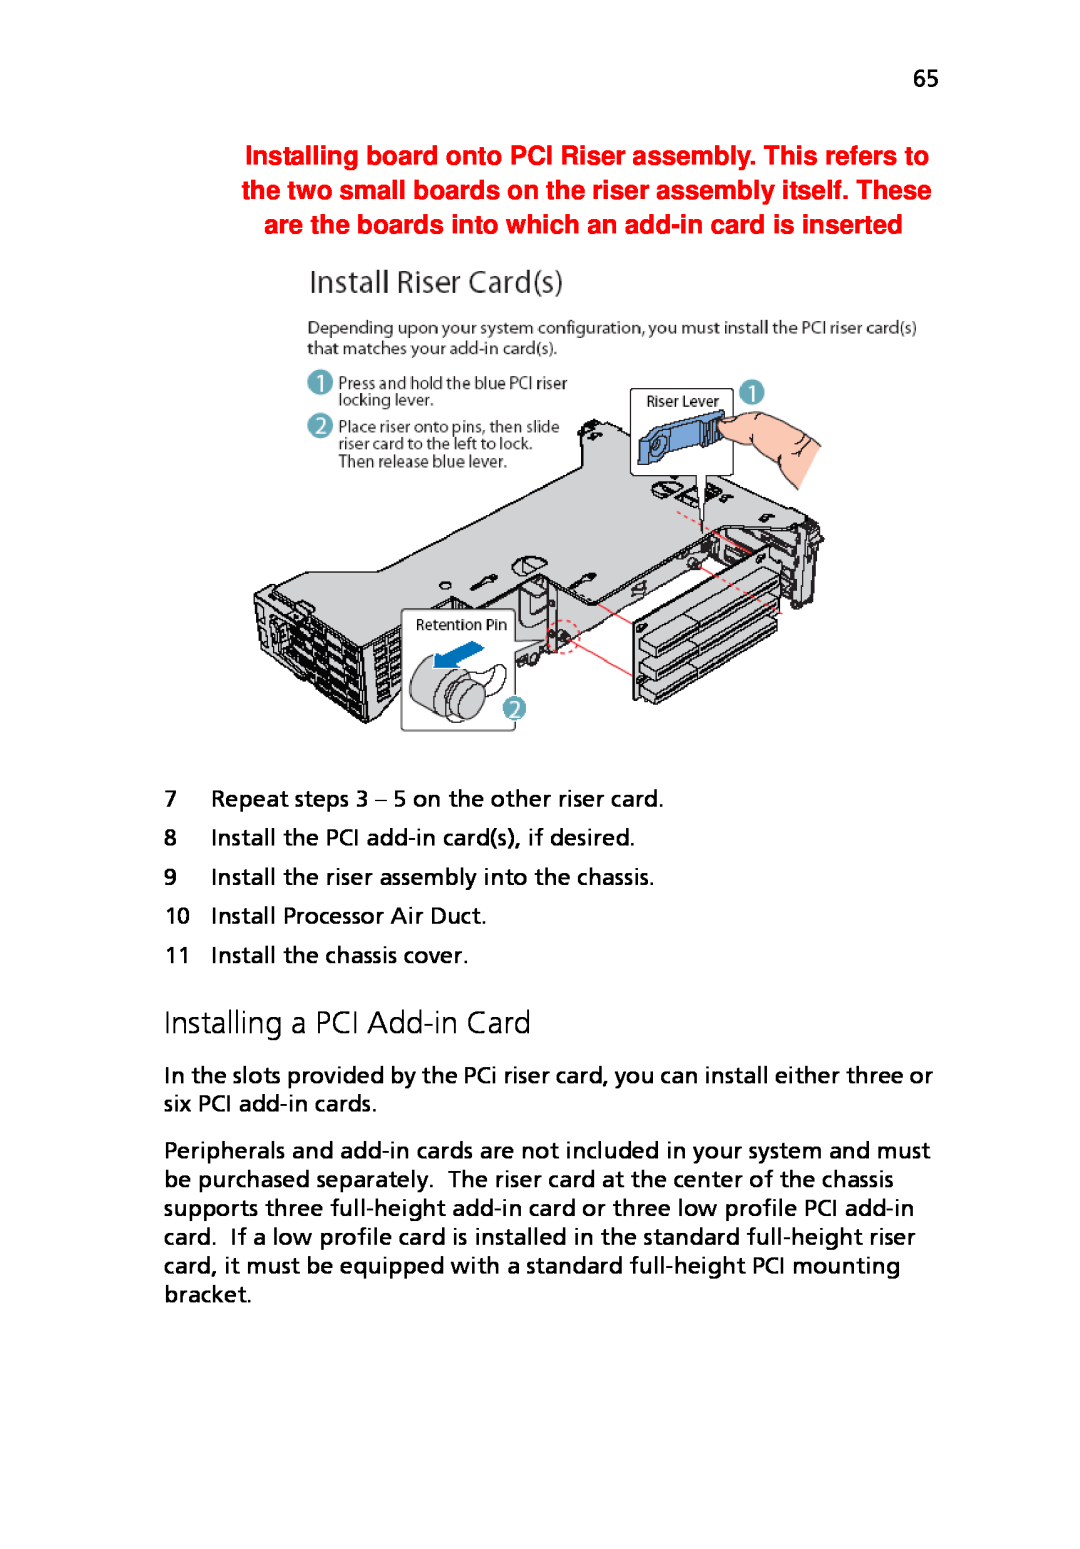 Acer Altos R710 manual Installing a PCI Add-in Card 